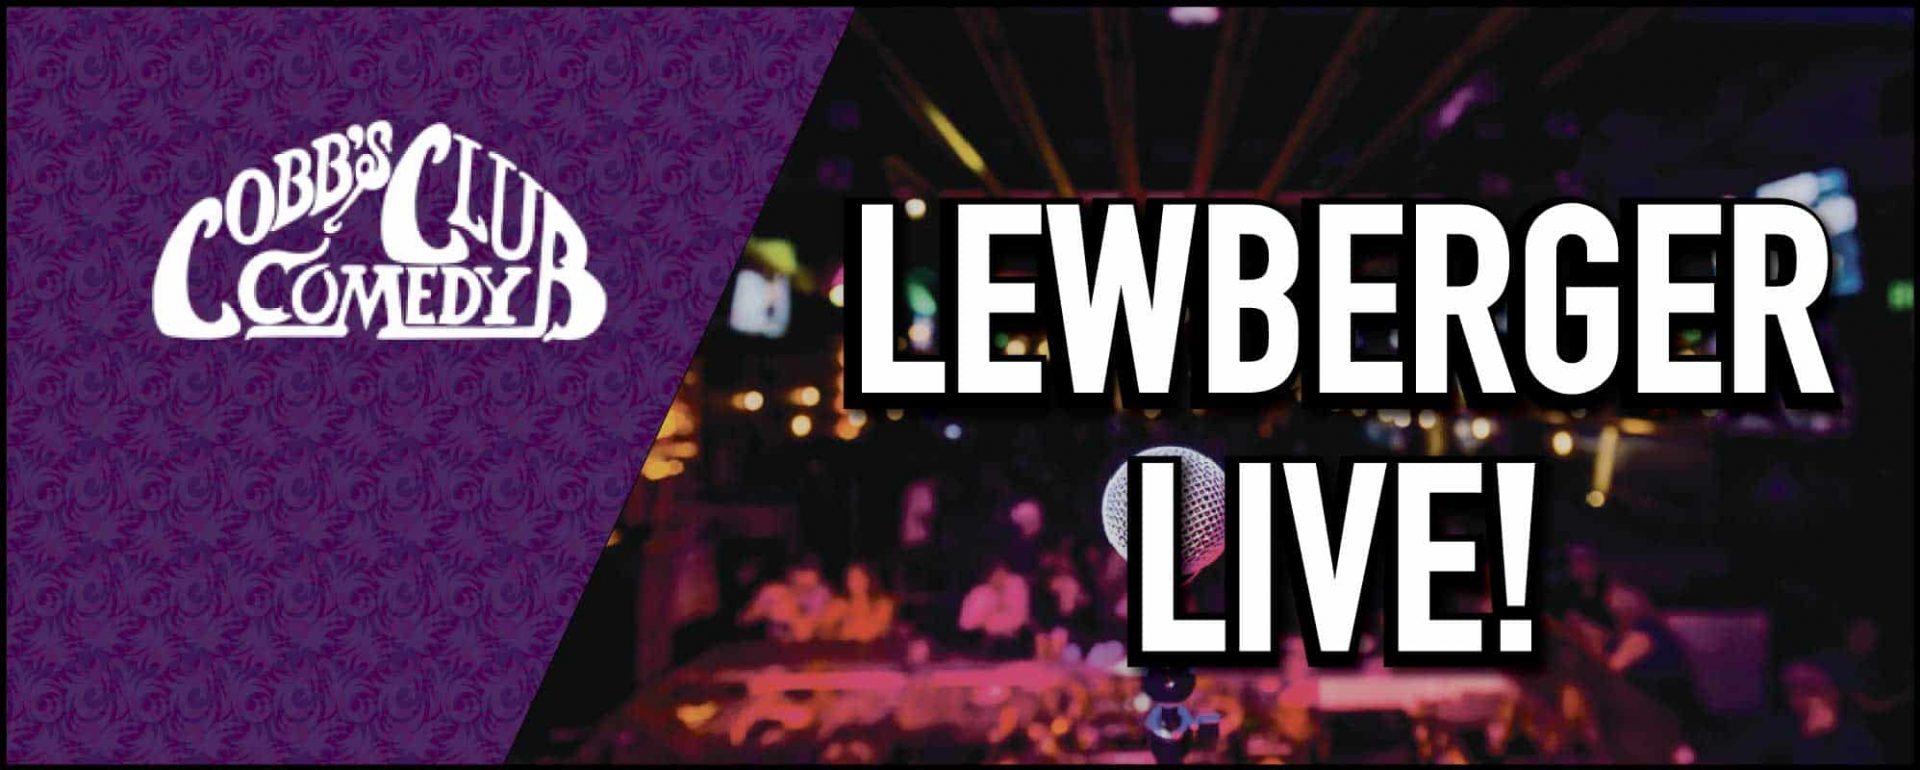 Lewberger Live at Cobbs Comedy Club SF